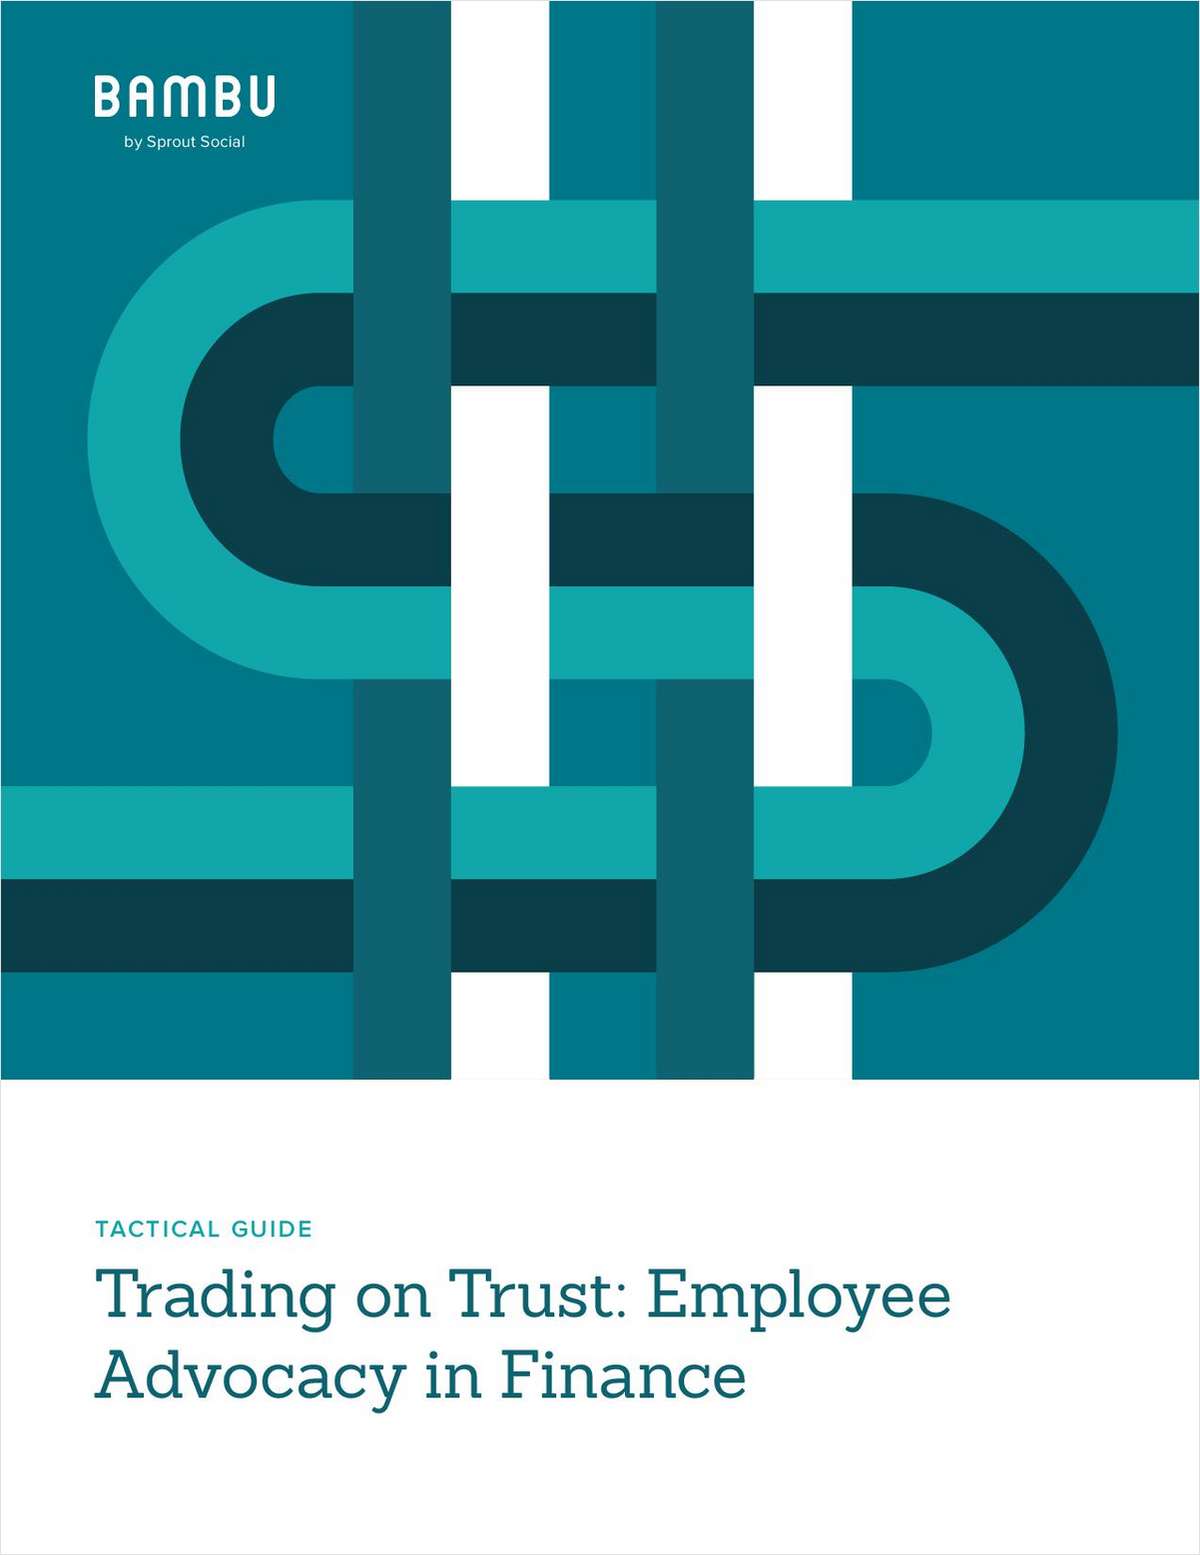 Trading on Trust: Employee Advocacy in Finance